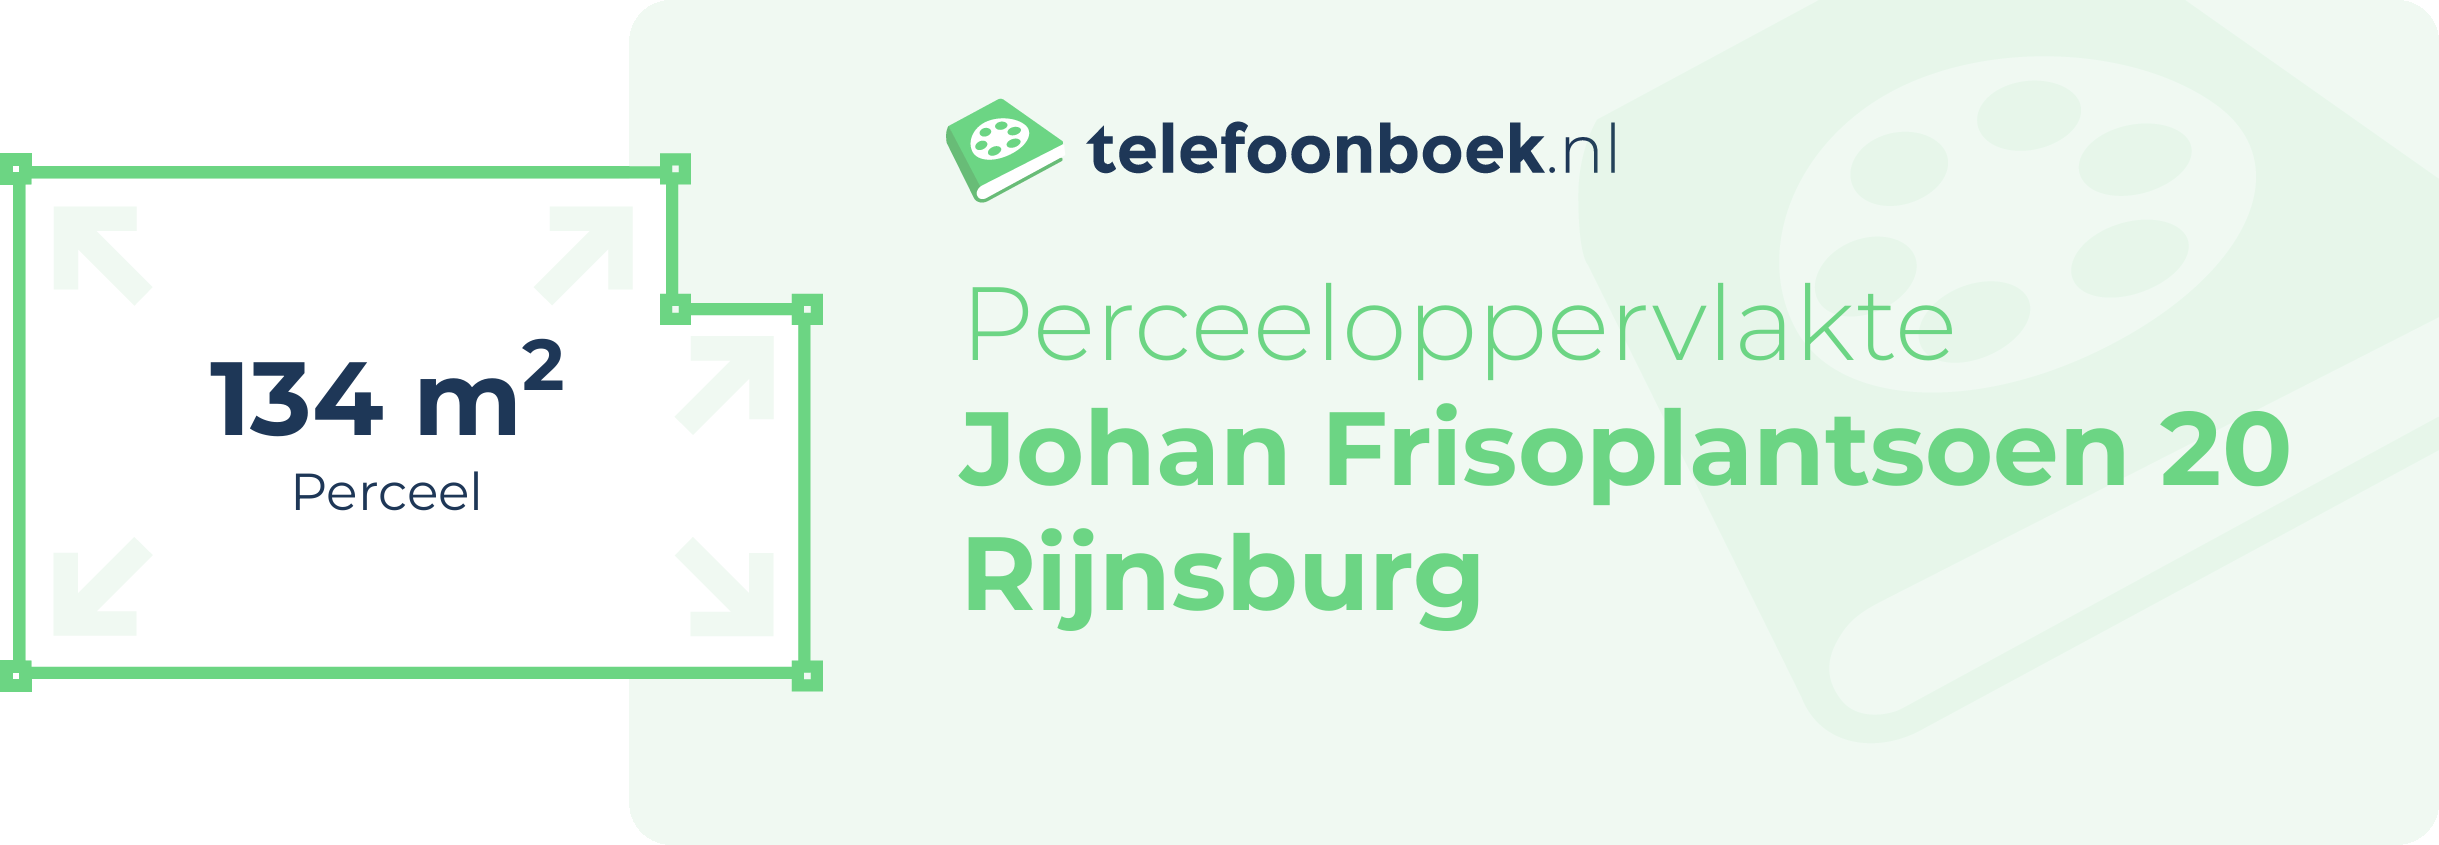 Perceeloppervlakte Johan Frisoplantsoen 20 Rijnsburg